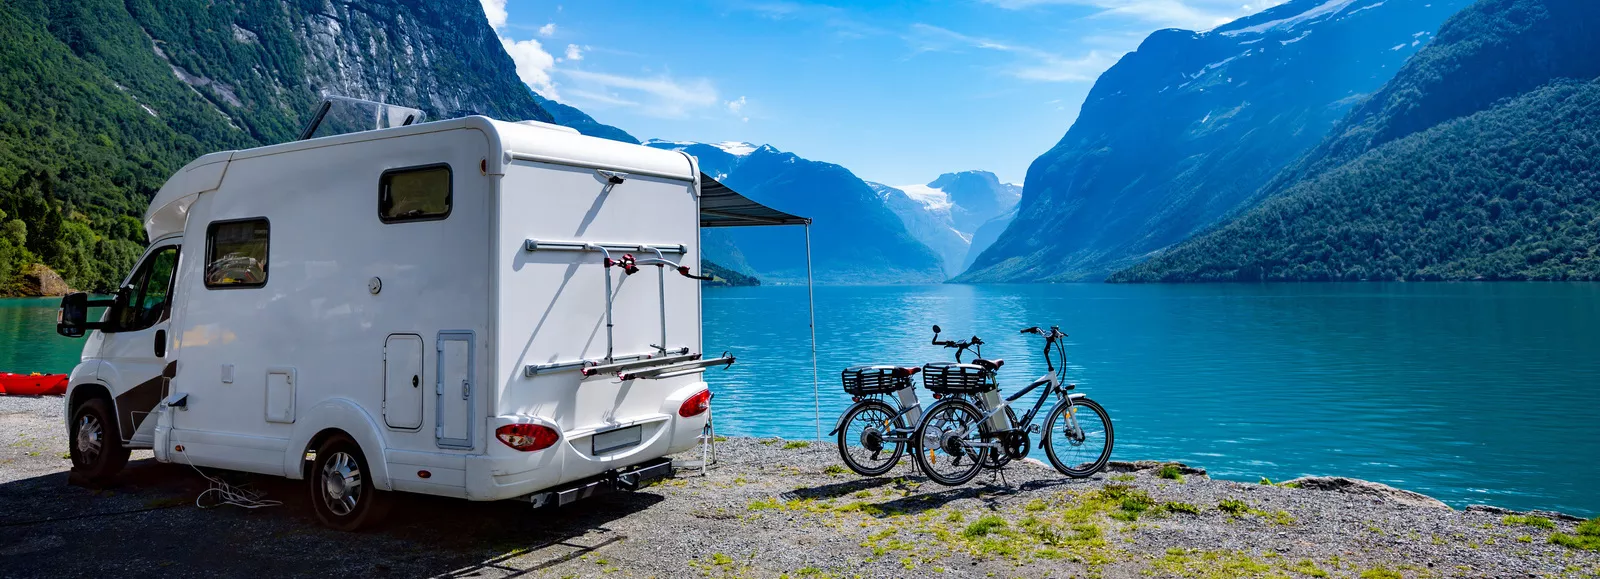 Camping at a mountain lake with a caravan